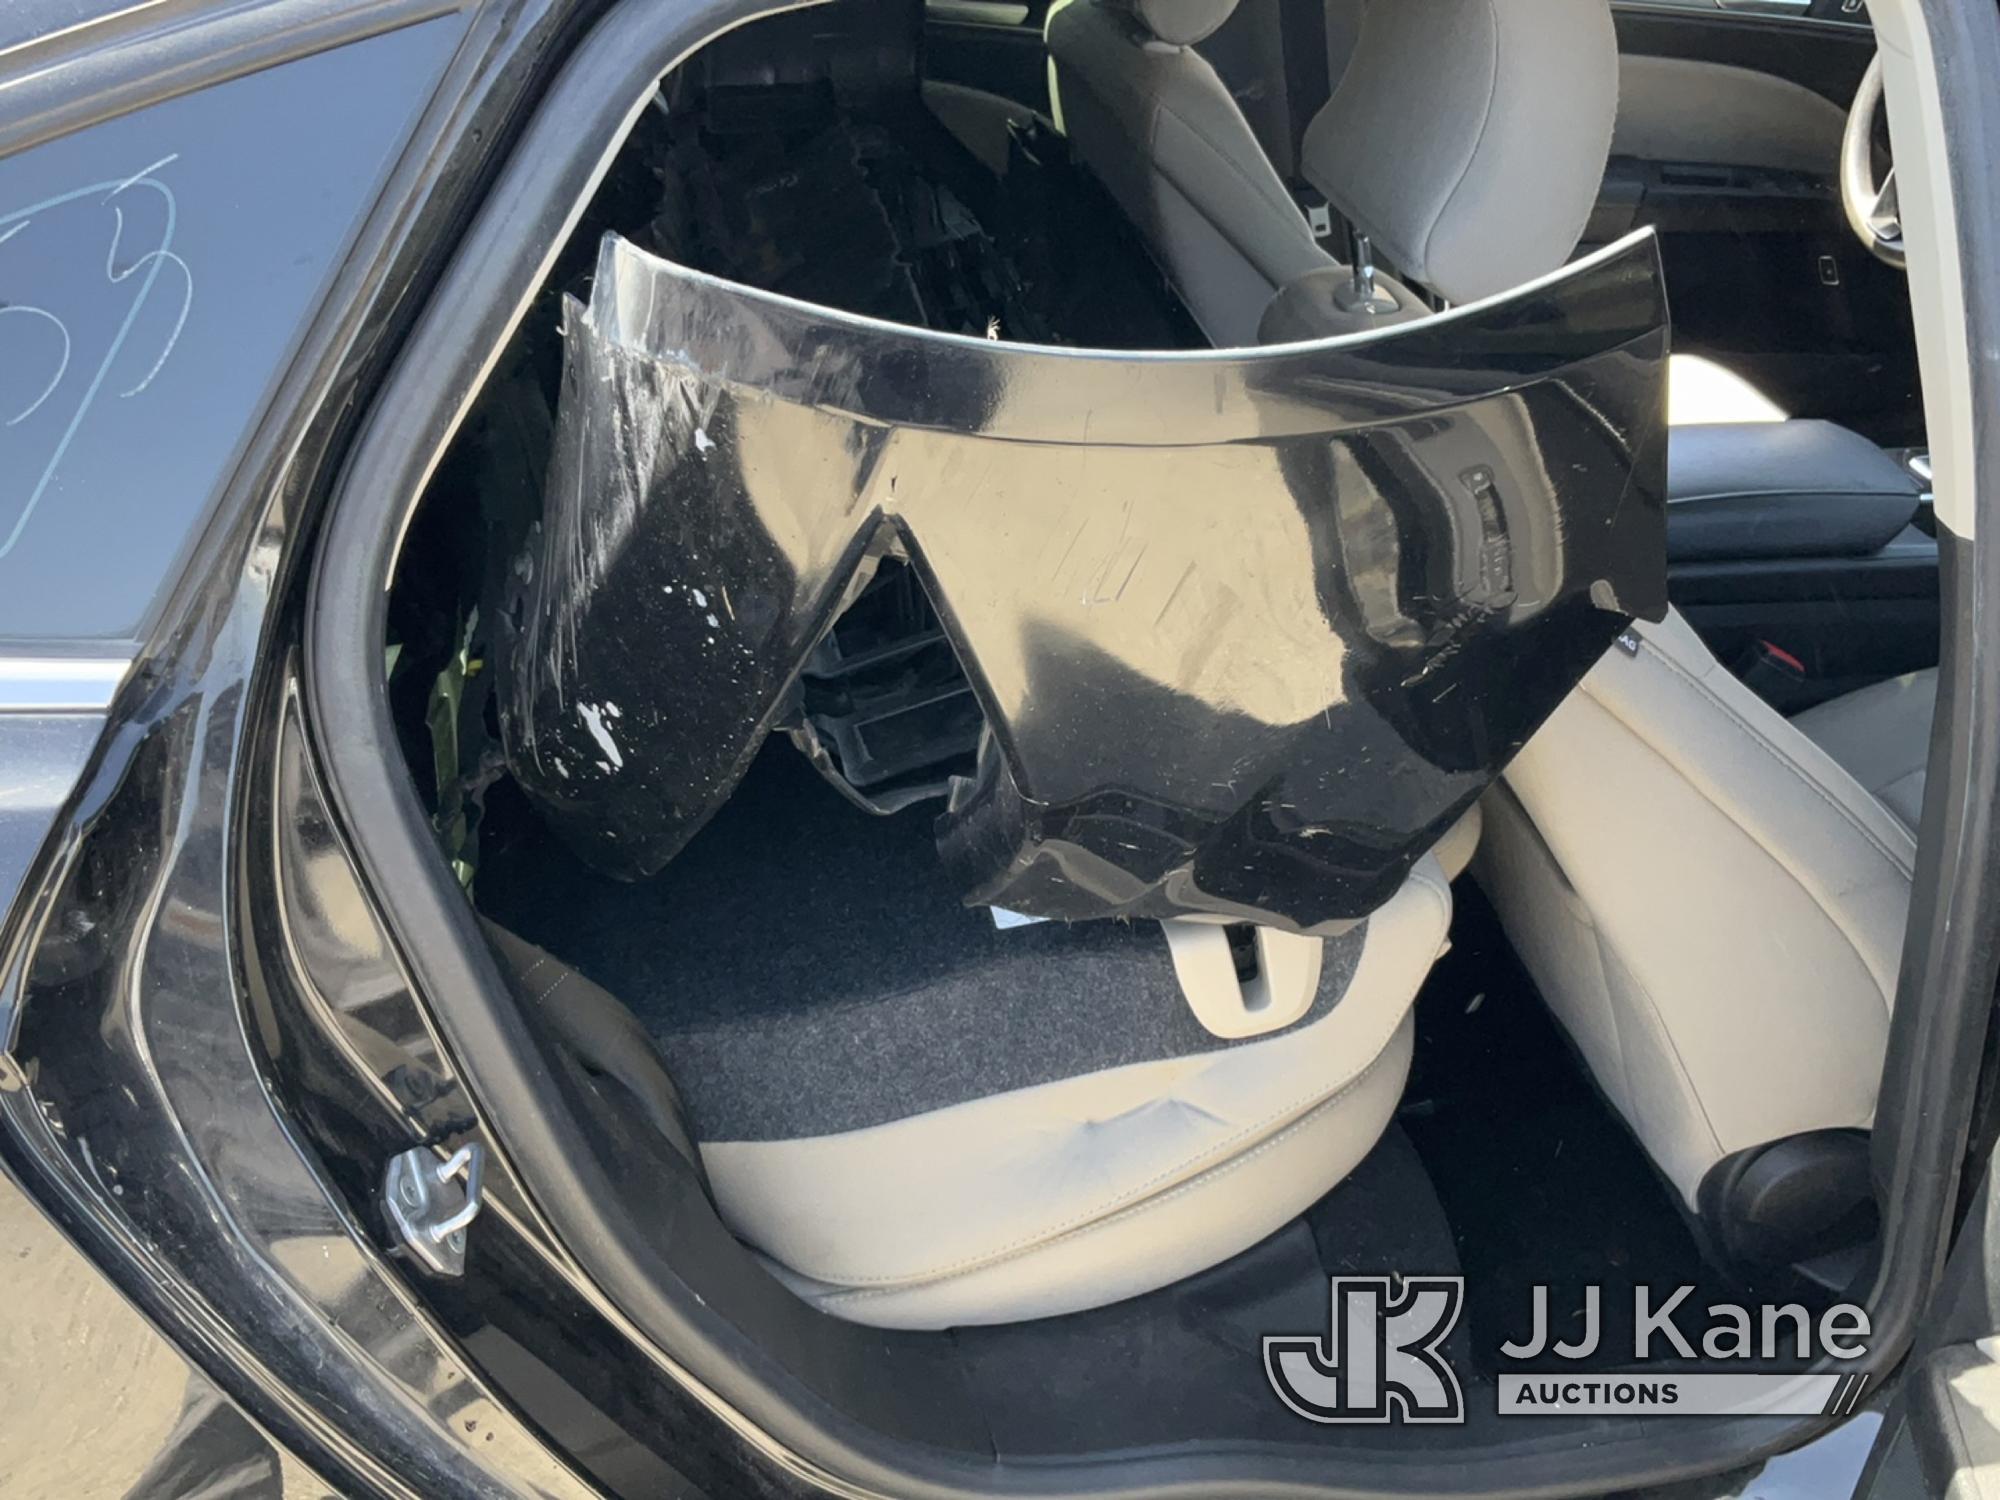 (Jurupa Valley, CA) 2018 Ford Fusion 4-Door Sedan Runs & Moves , Wrecked , Paint Damage, Body Damage